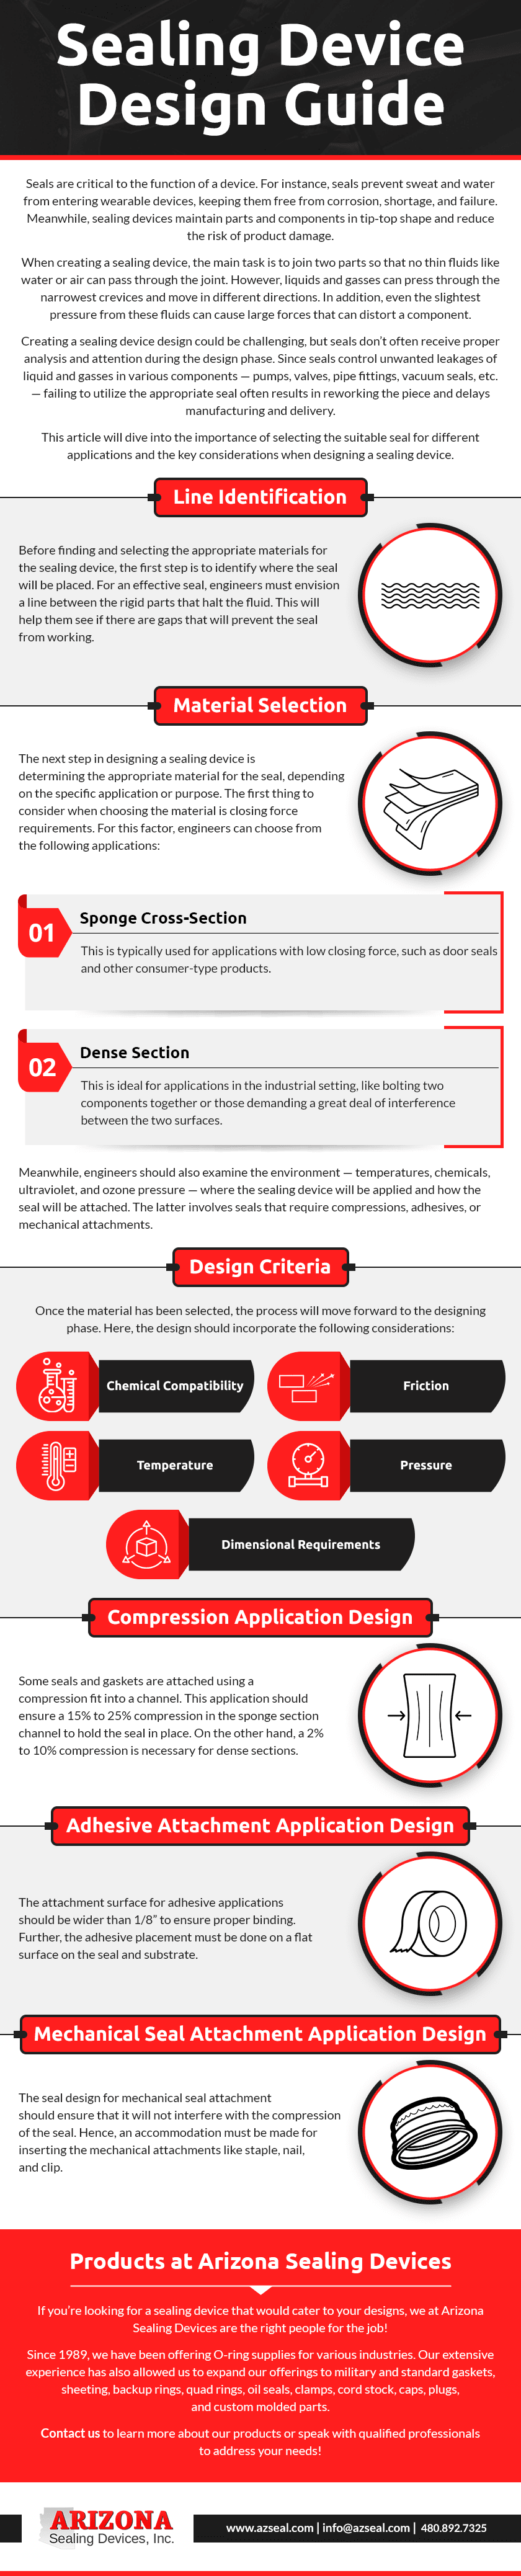 Sealing-Device-Design-Guide” data-lazy-src=